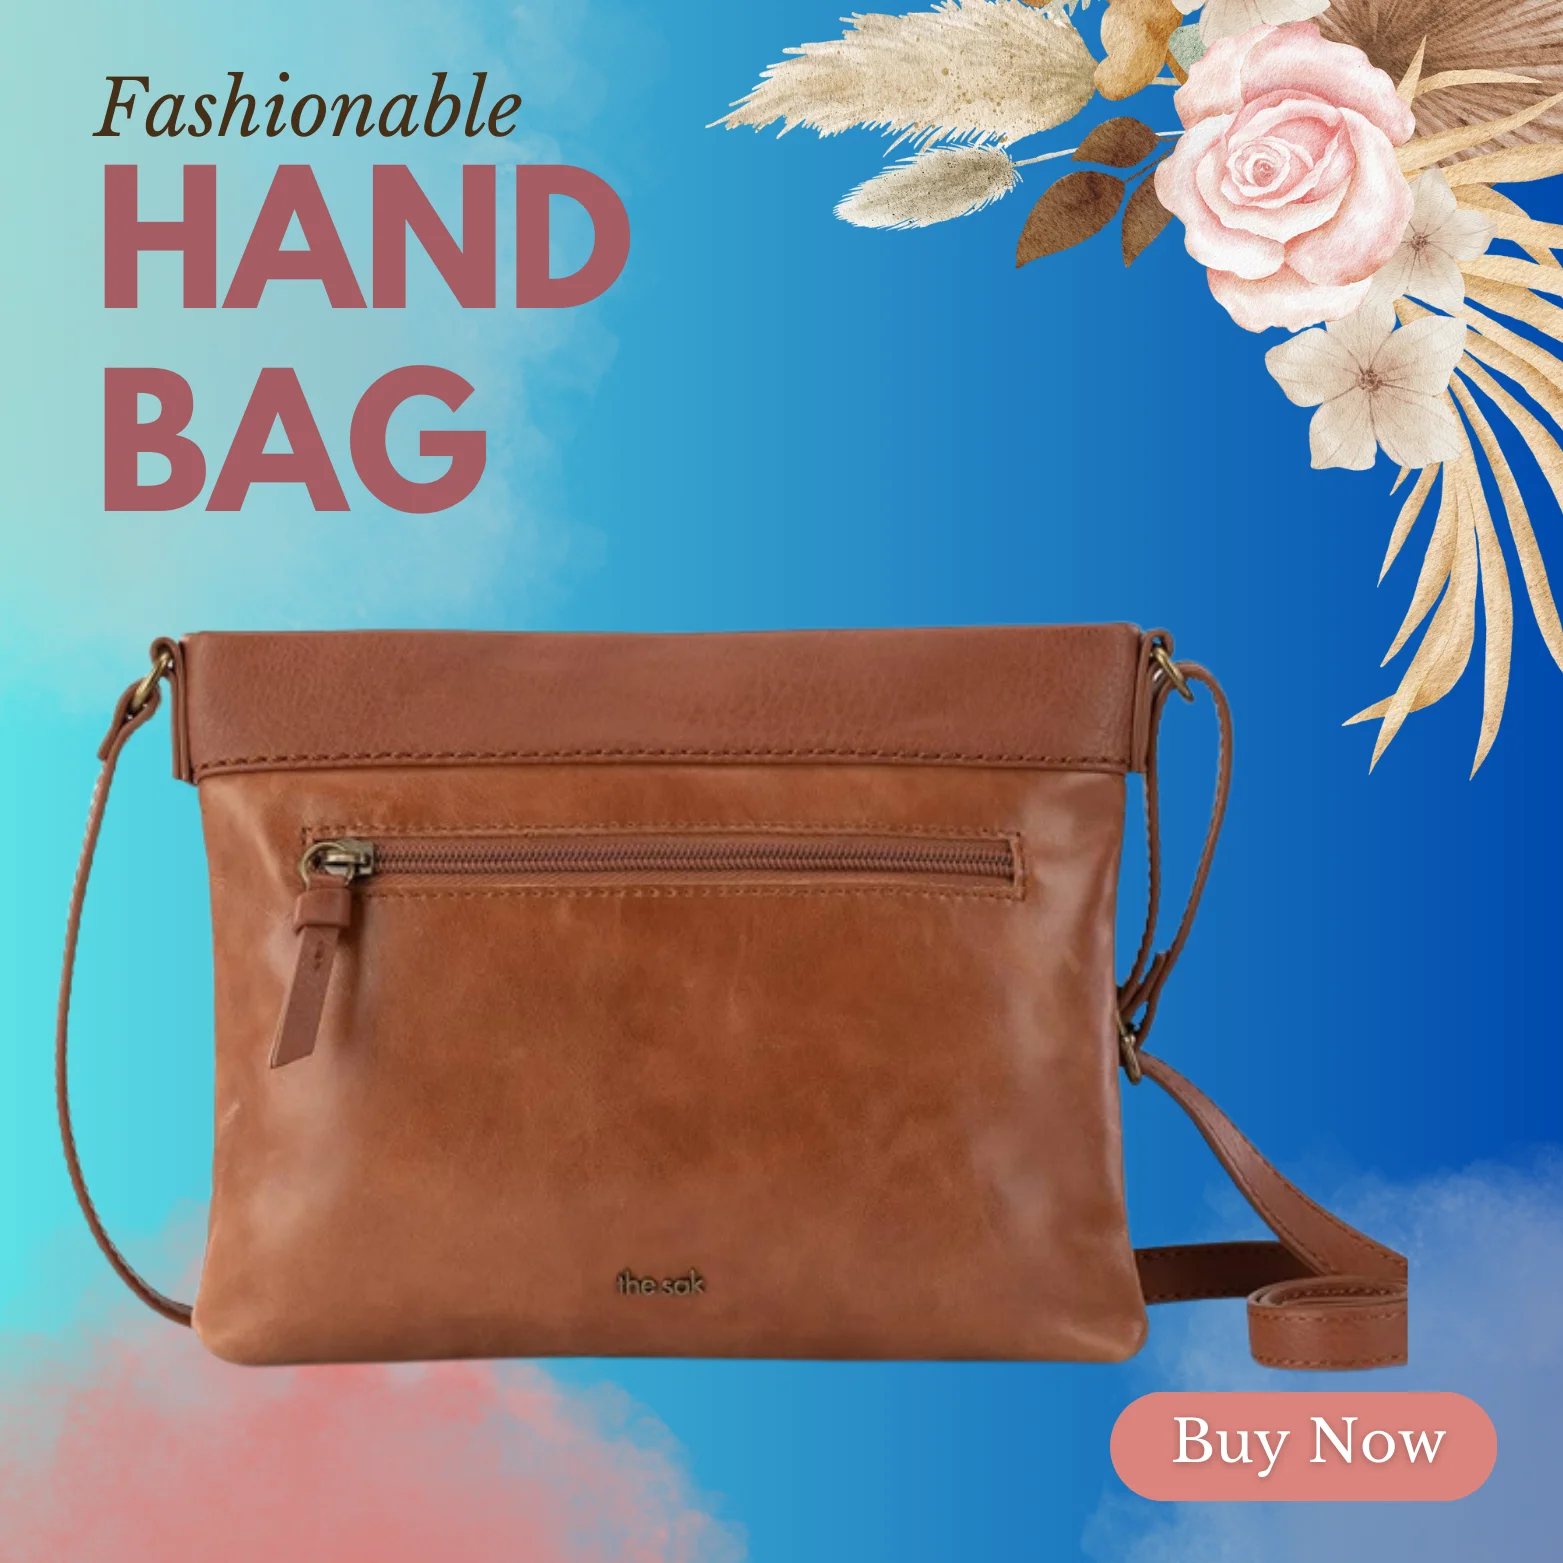 leather handbags 